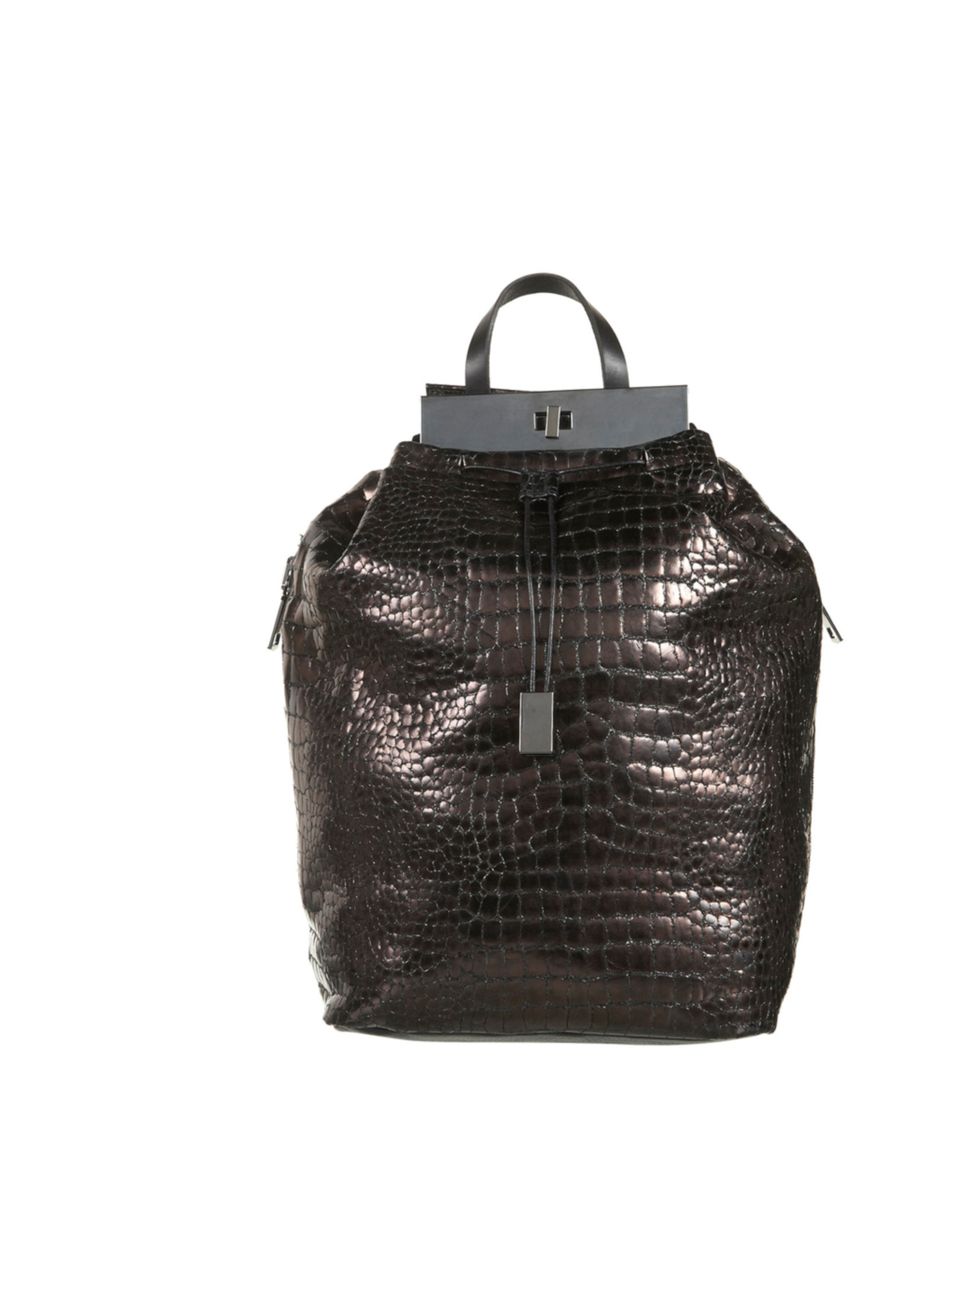 <p>Topshop Unique textured leather backpack, £400</p><p><a href="http://shopping.elleuk.com/browse?fts=topshop+unique+backpack">BUY NOW</a></p>